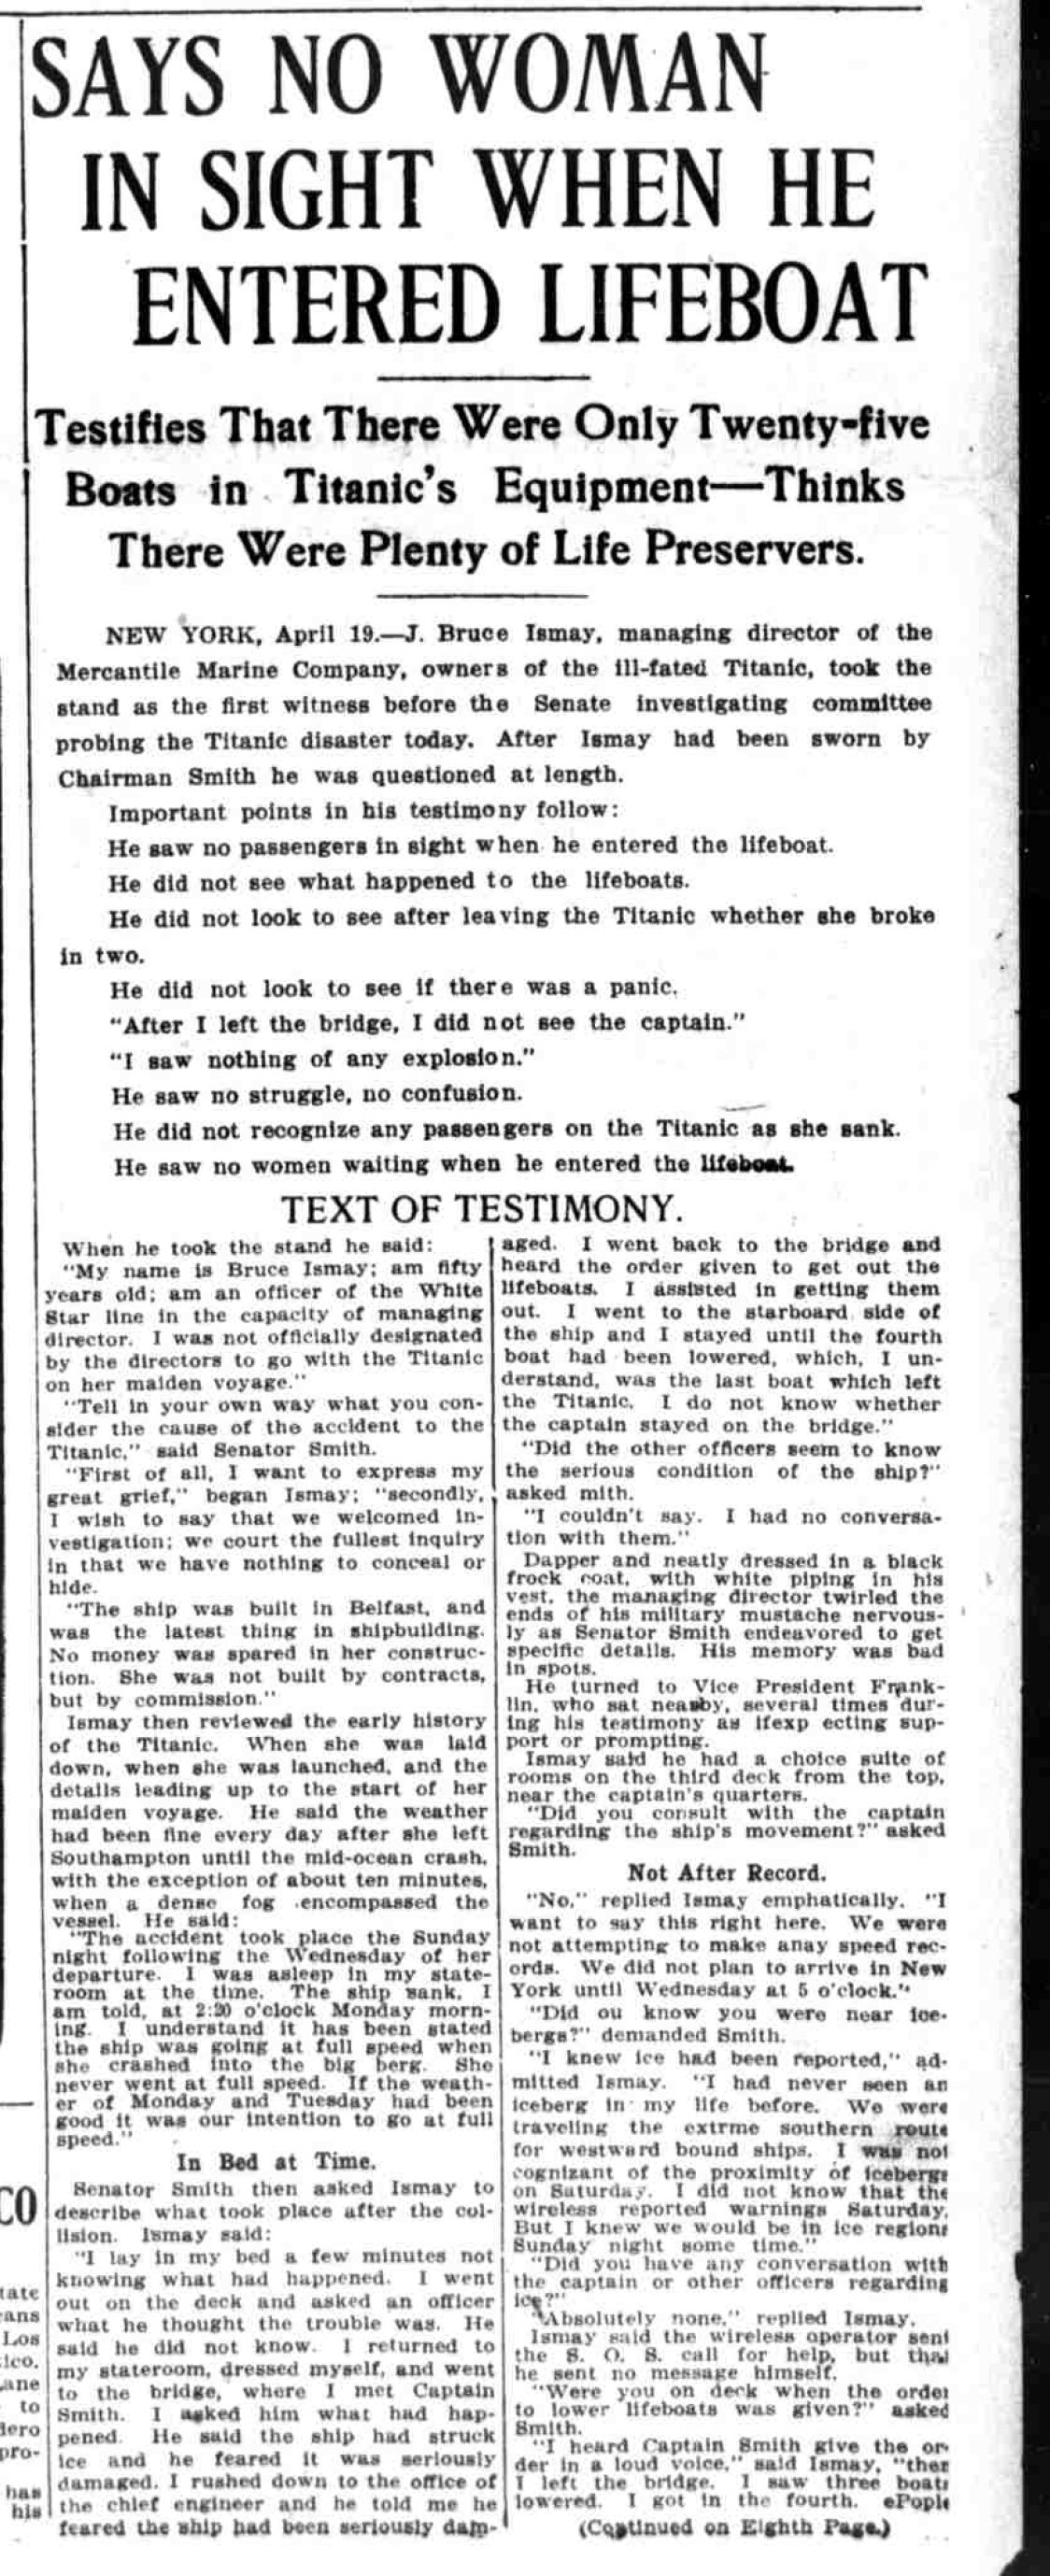 Titanic Newspaper Article 1912-04-19 The Washington Times, April 19, 1912, LAST EDITION, Page 1